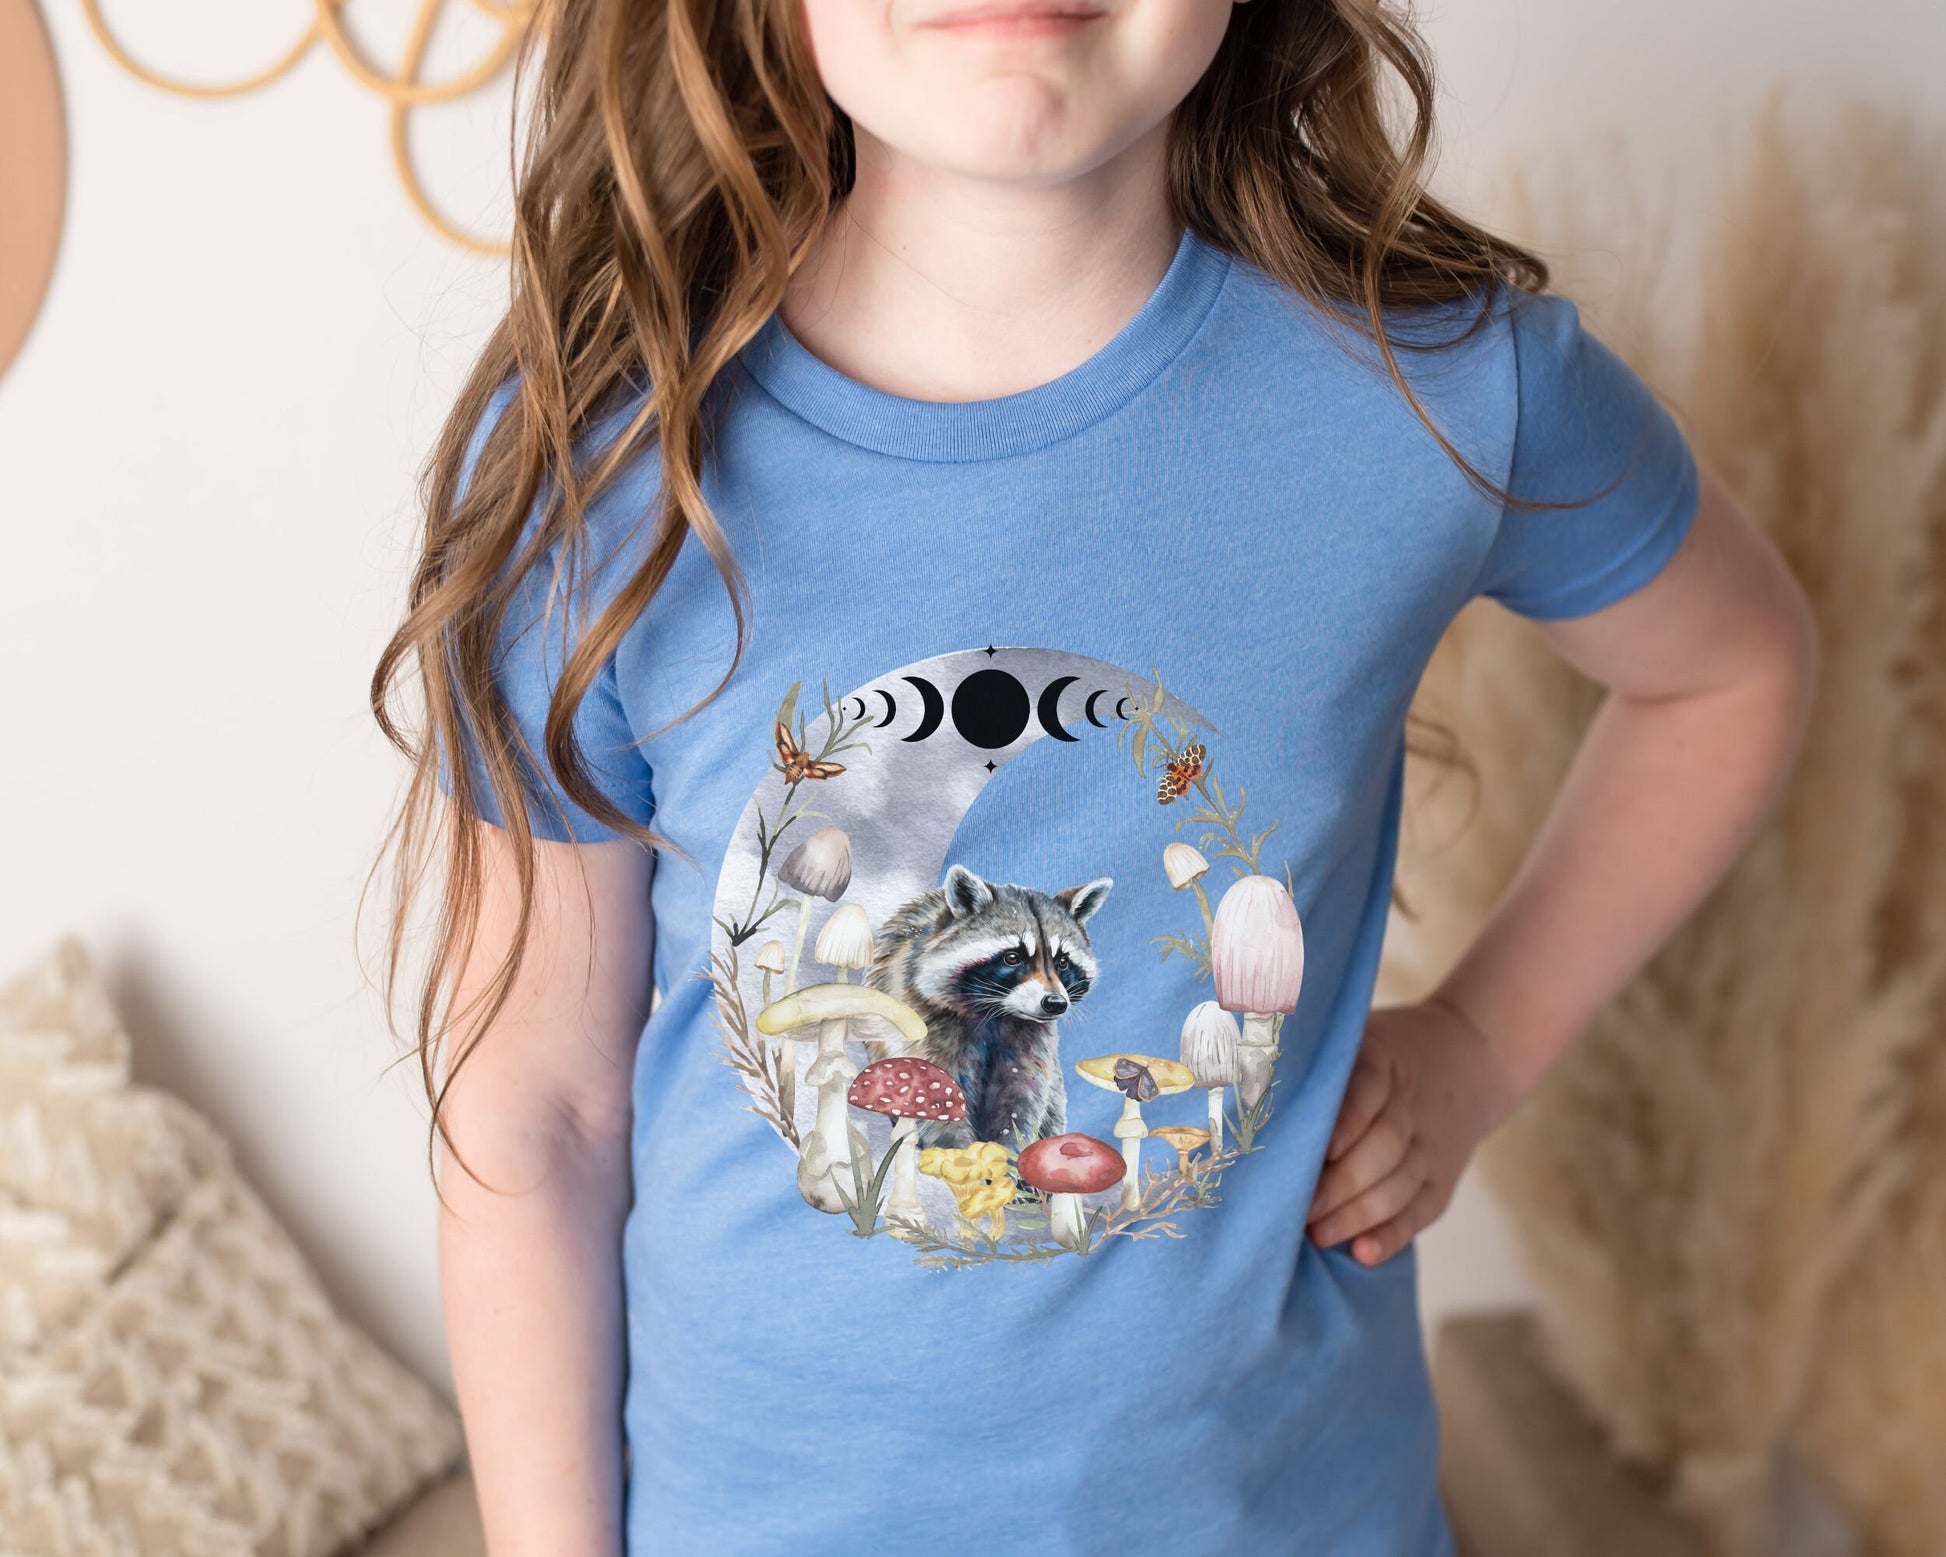 Raccoon Shirt For Kids Mushroom Shirt Goblincore Toddler Dark Cottagecore Shirt Kids Forestcore Shirt Racoon Shirt for Toddler Moon Phases